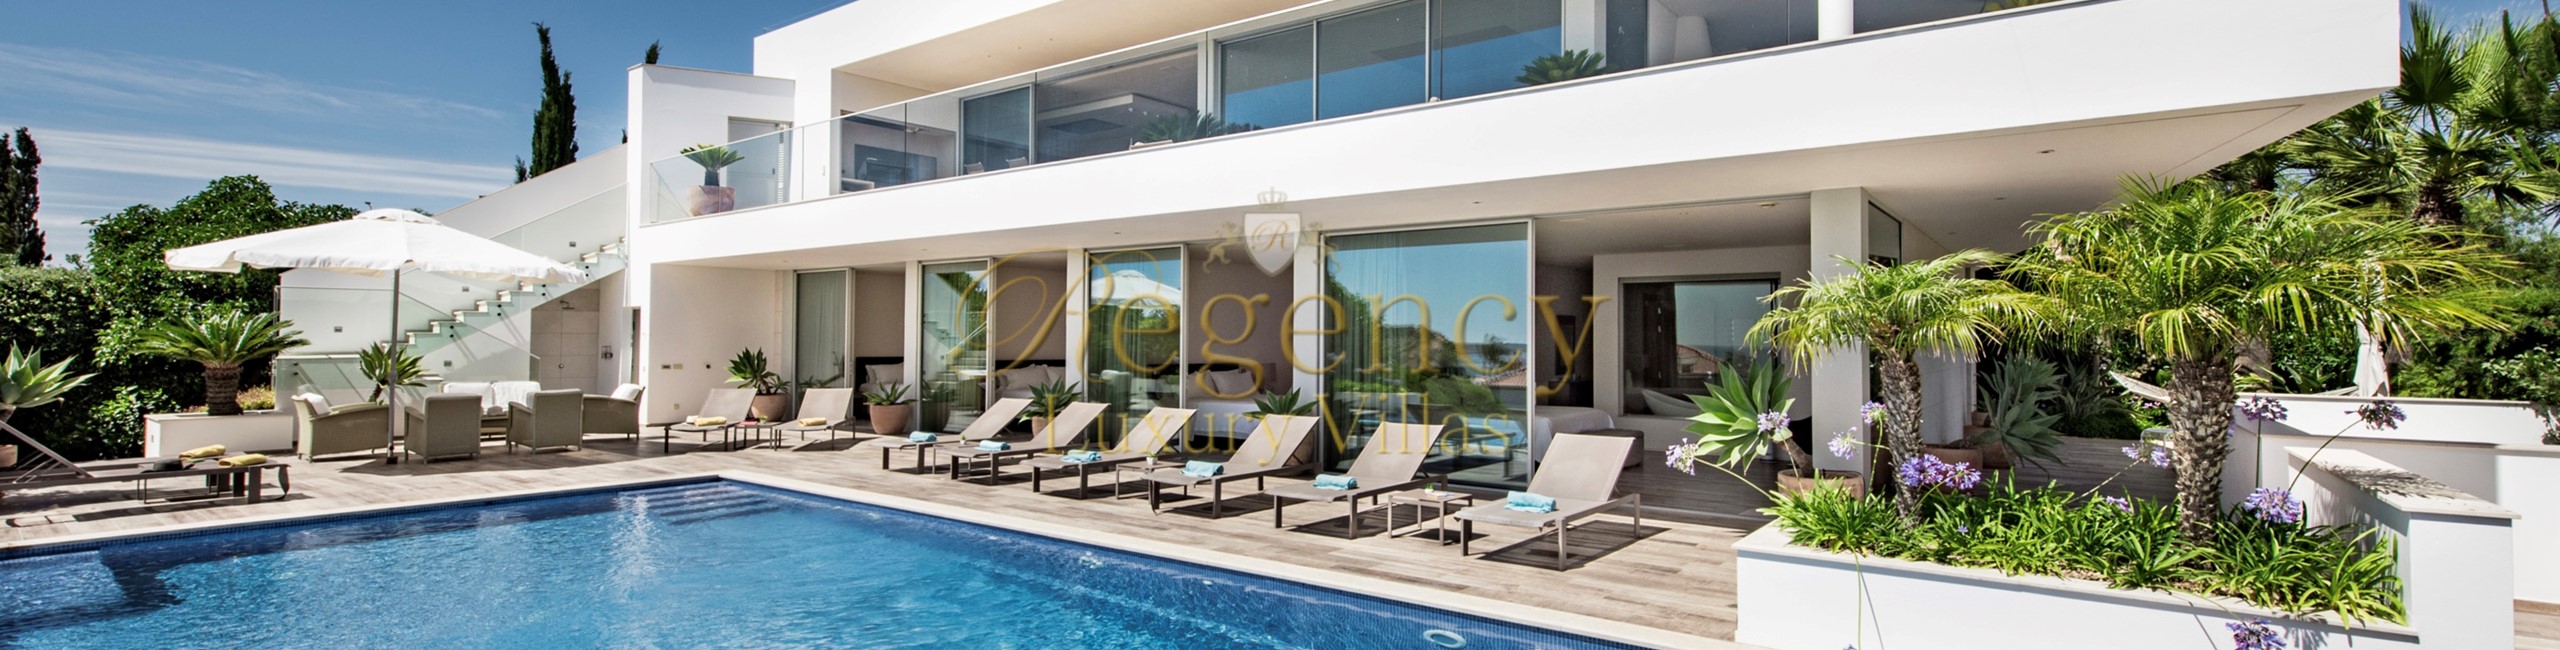 Luxury Villa To Rent In The Algarve Near The Beach 36